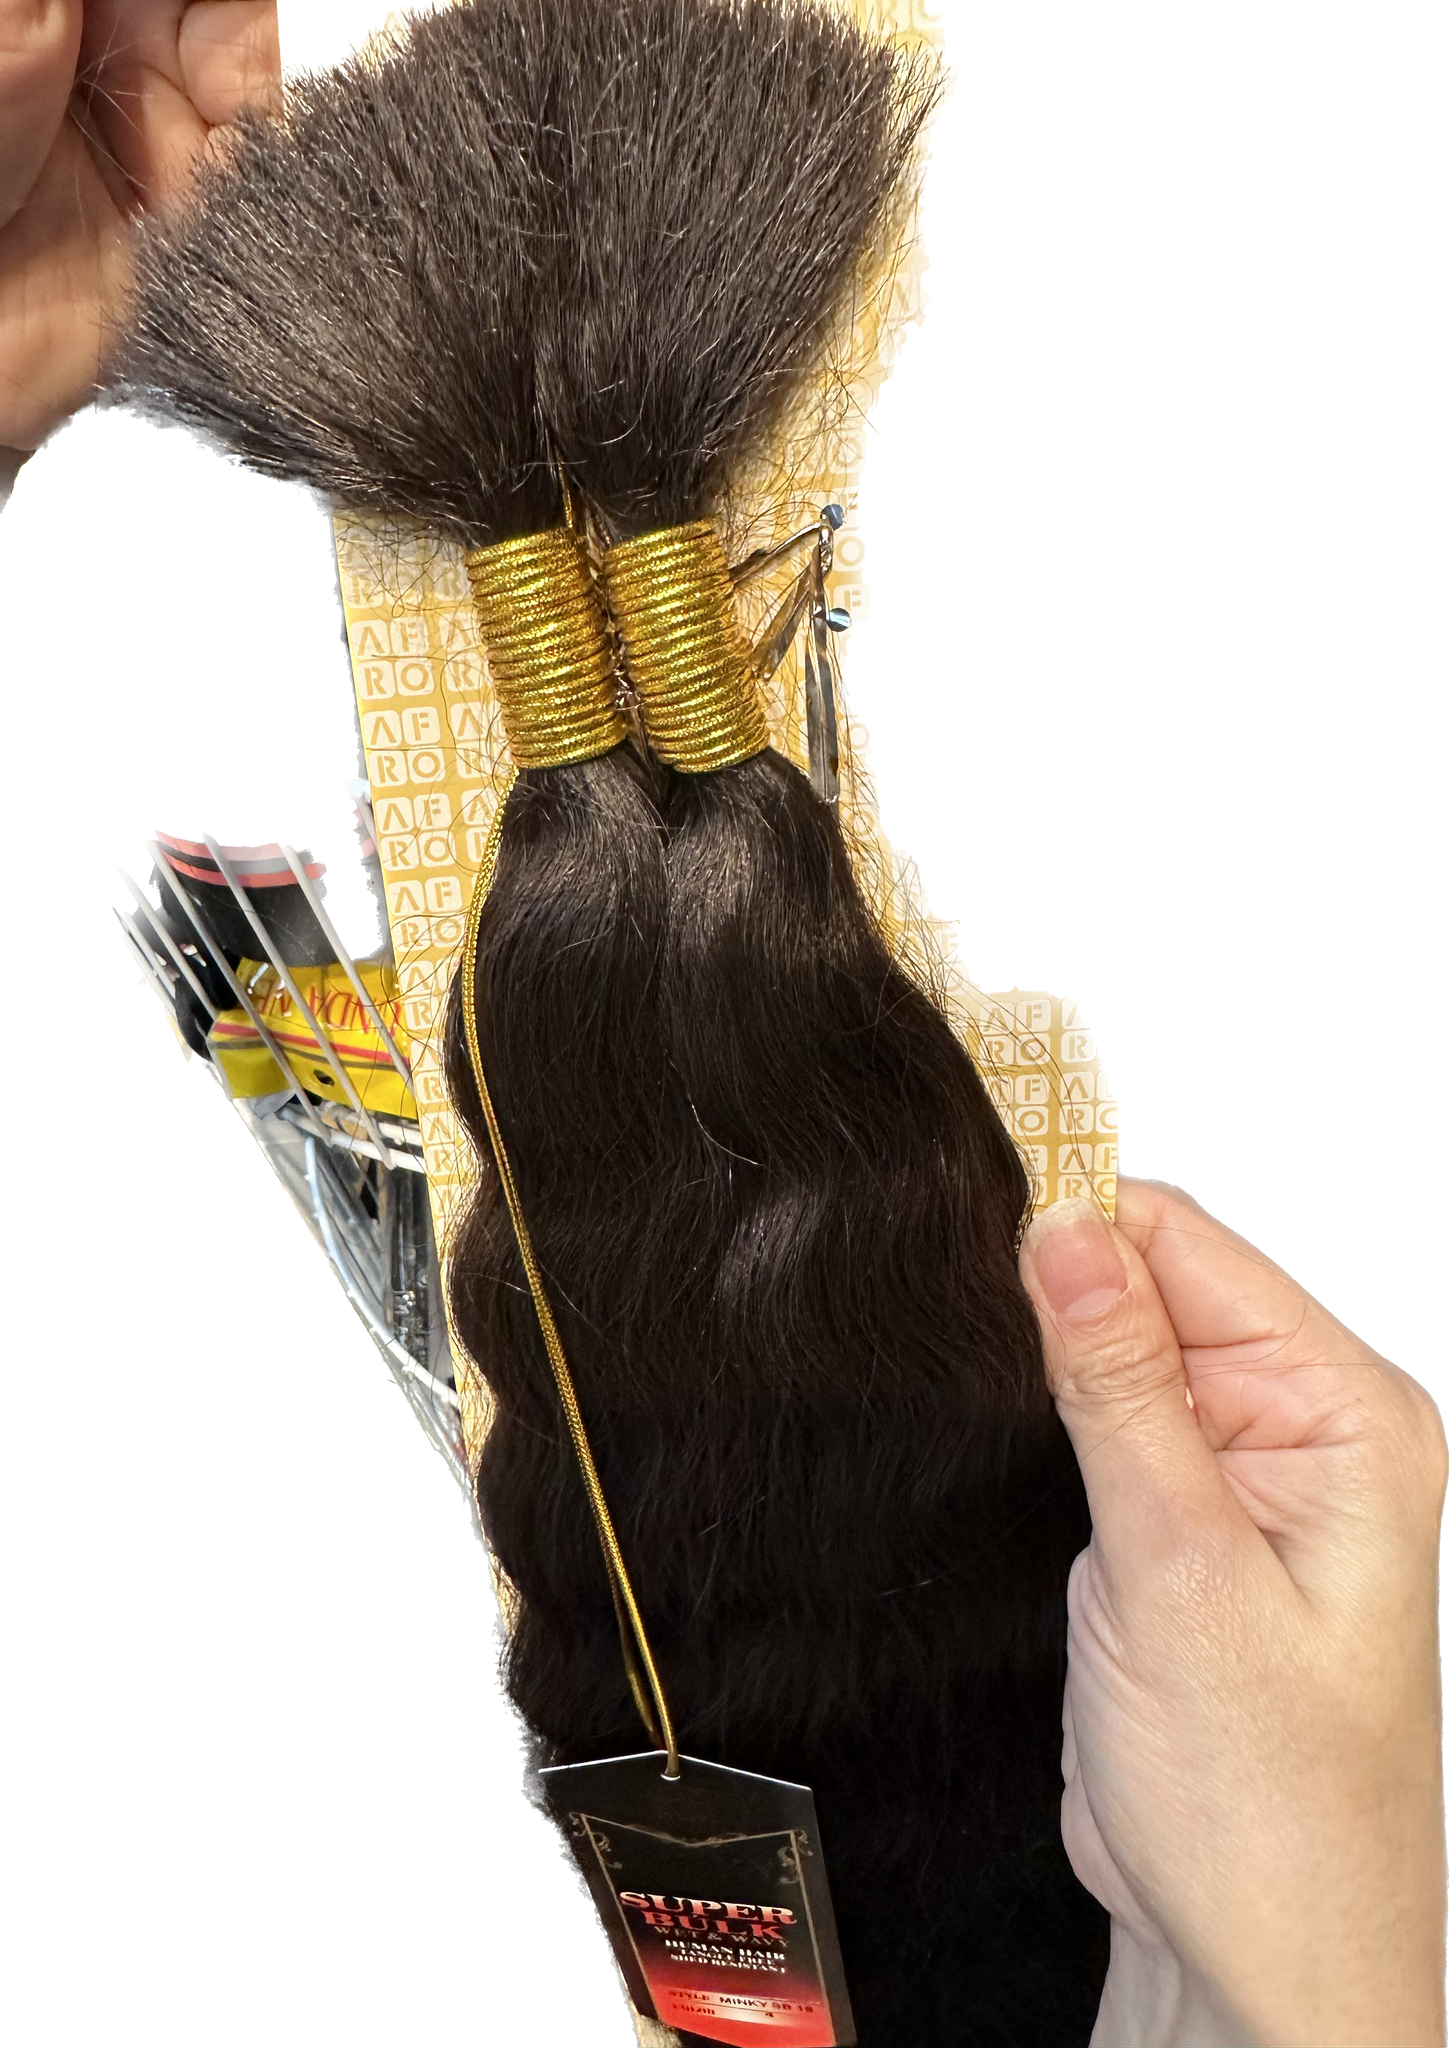 Minky Wet and Wavy Bulk Braiding Hair 100% Human Hair